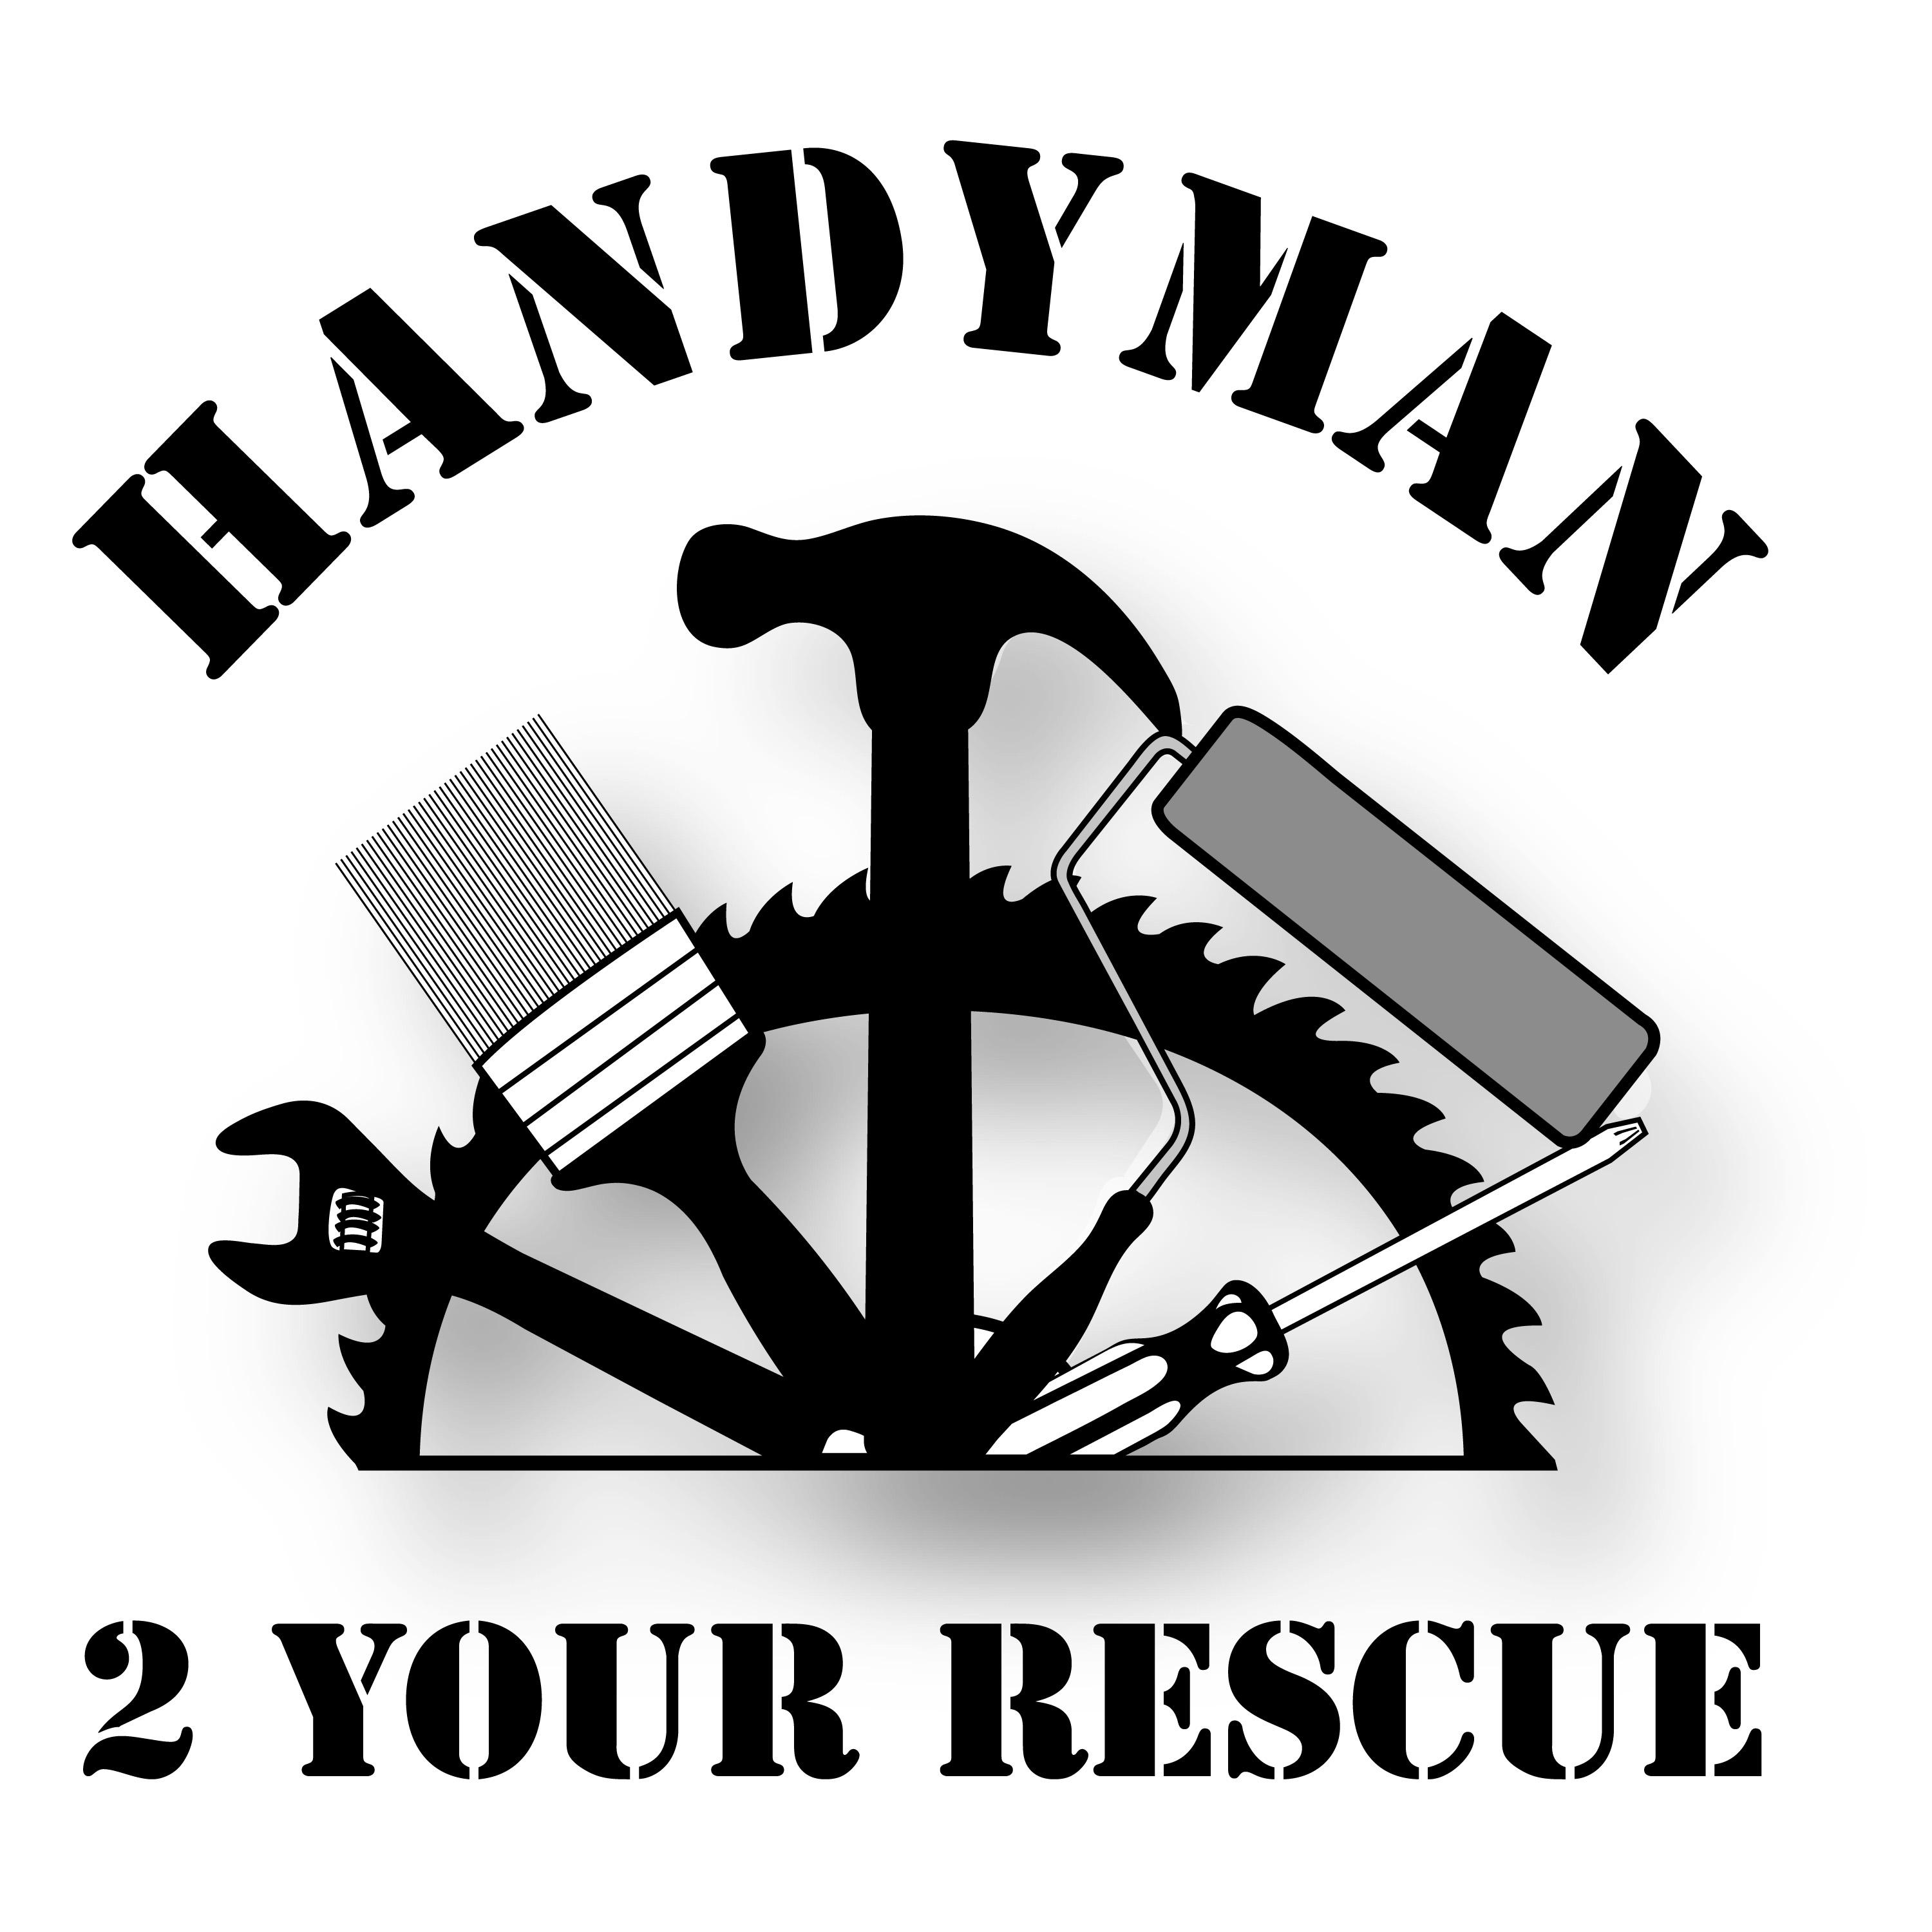 ... Handyman logo clipart ...